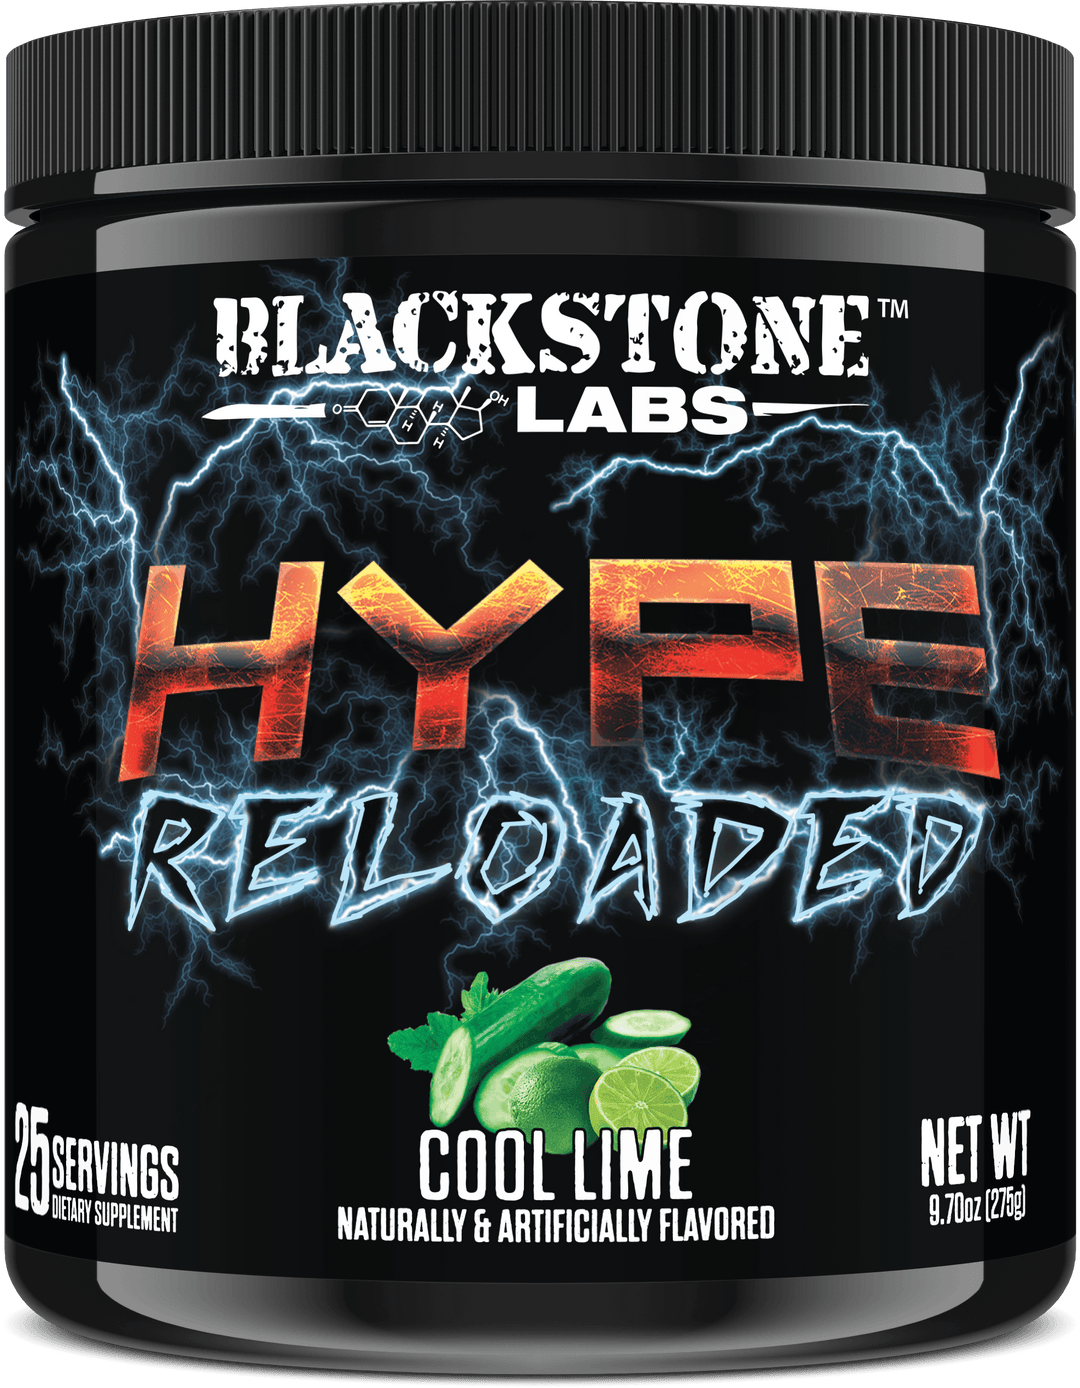 Blackstone Labs Cool Lime Blackstone Labs Hype Reloaded, 25 Servings